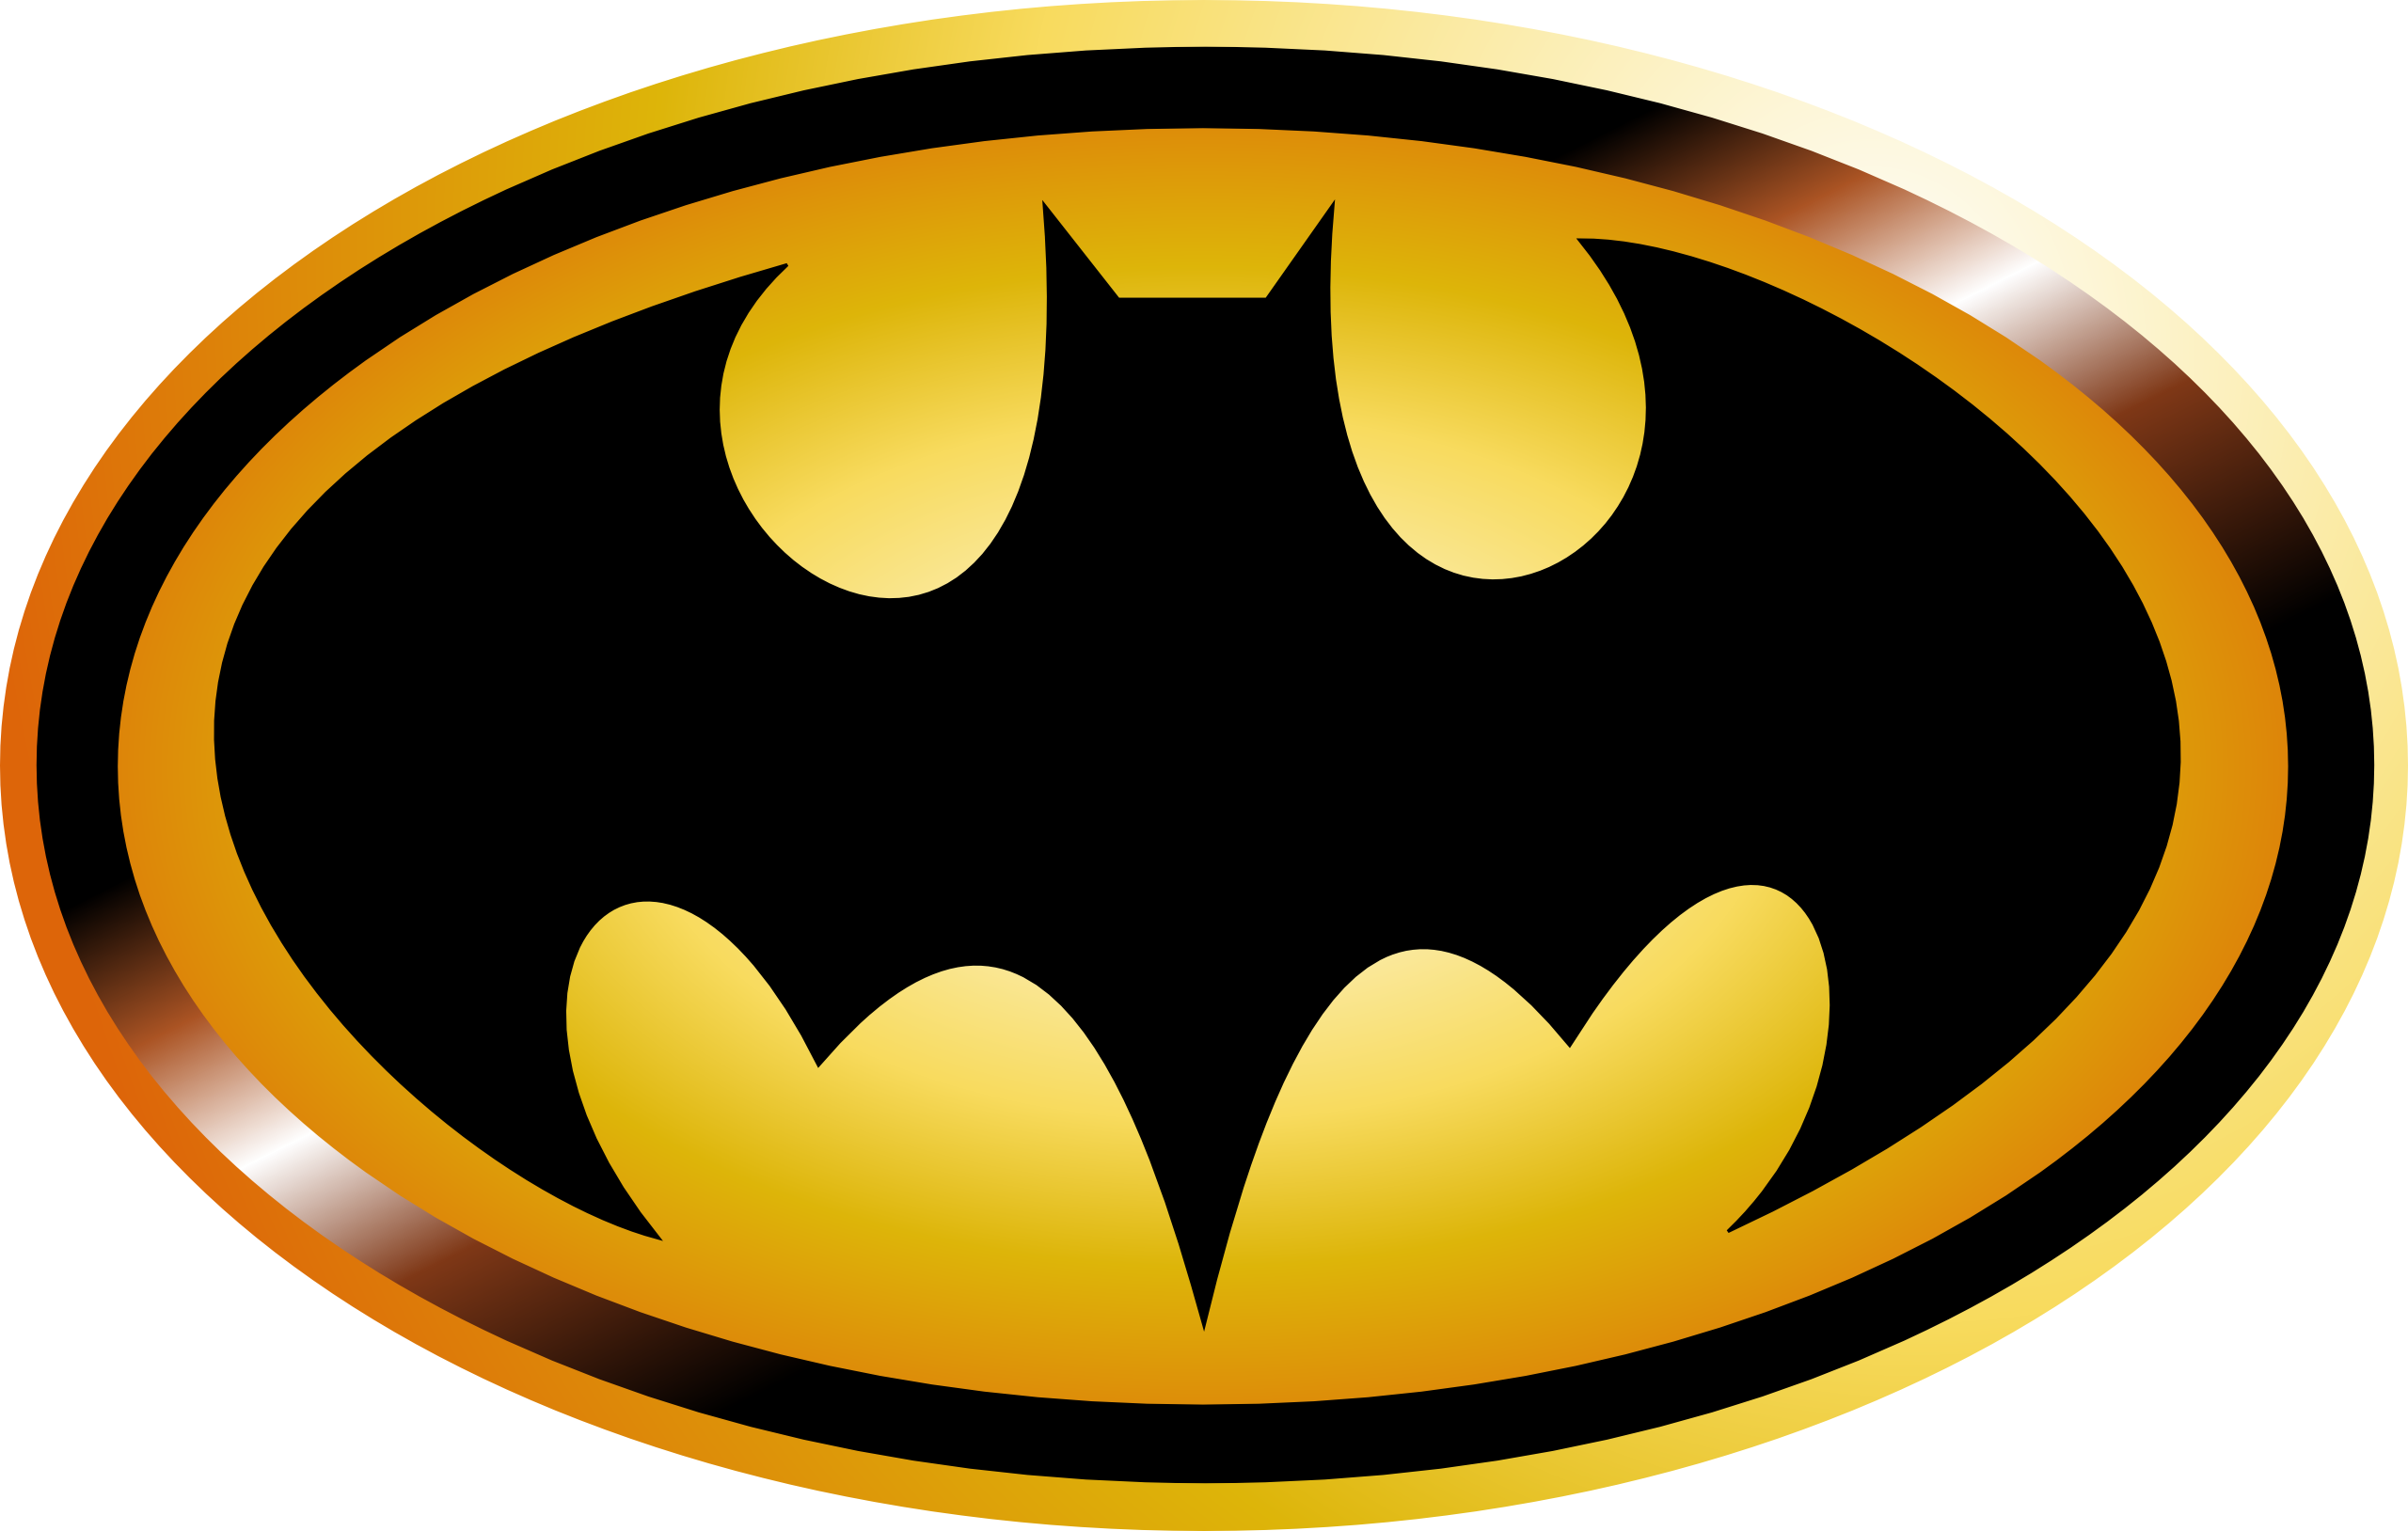 Printable Batman Logo - ClipArt Best